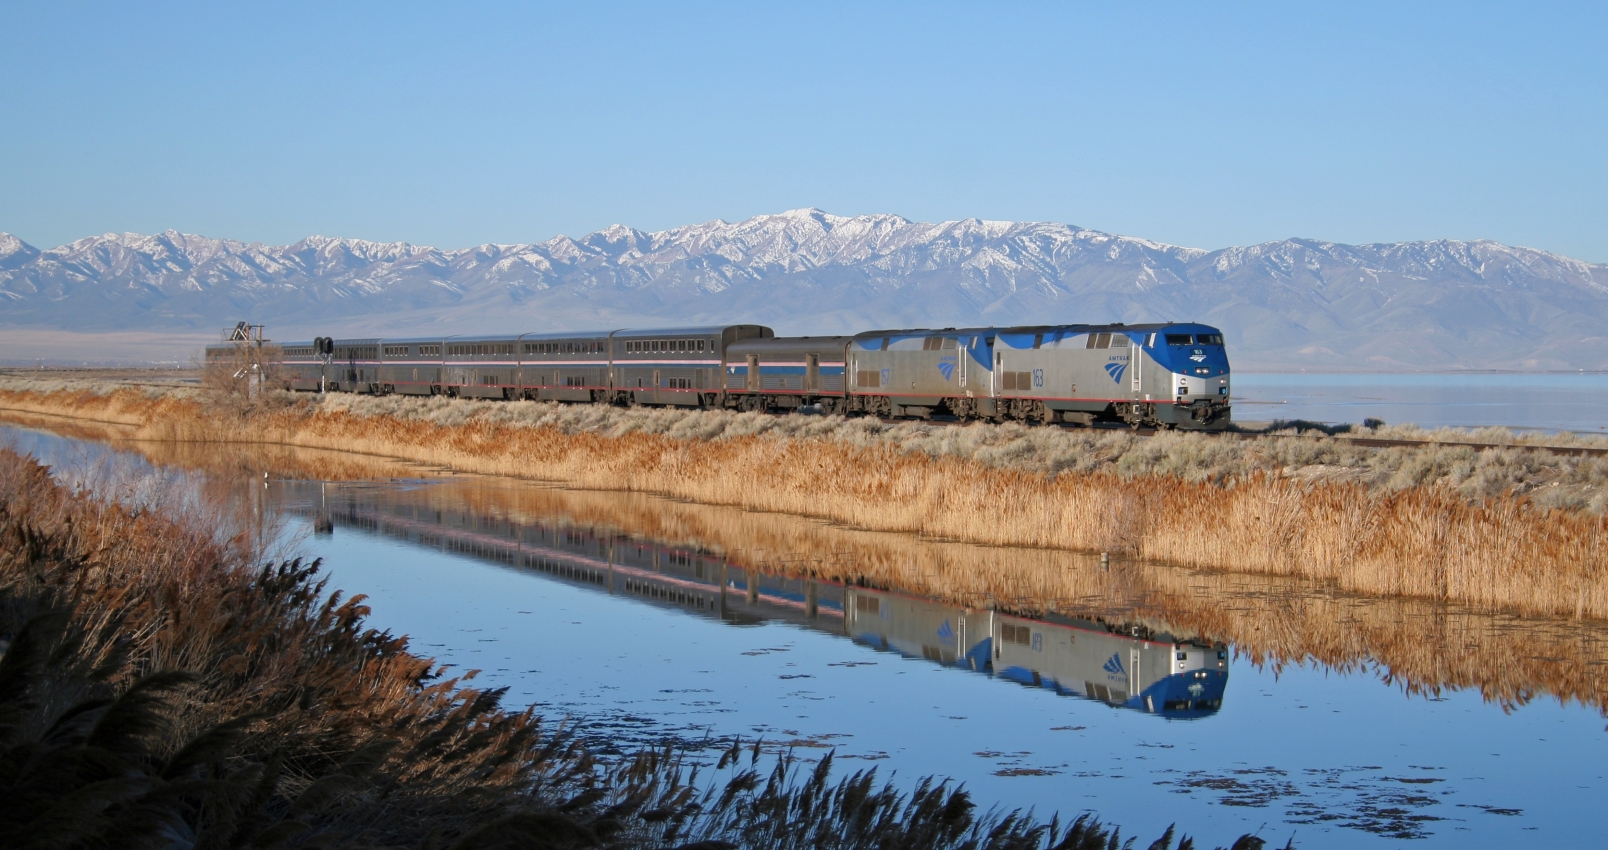 Amtrak's California Zephyr on a roundtrip journey